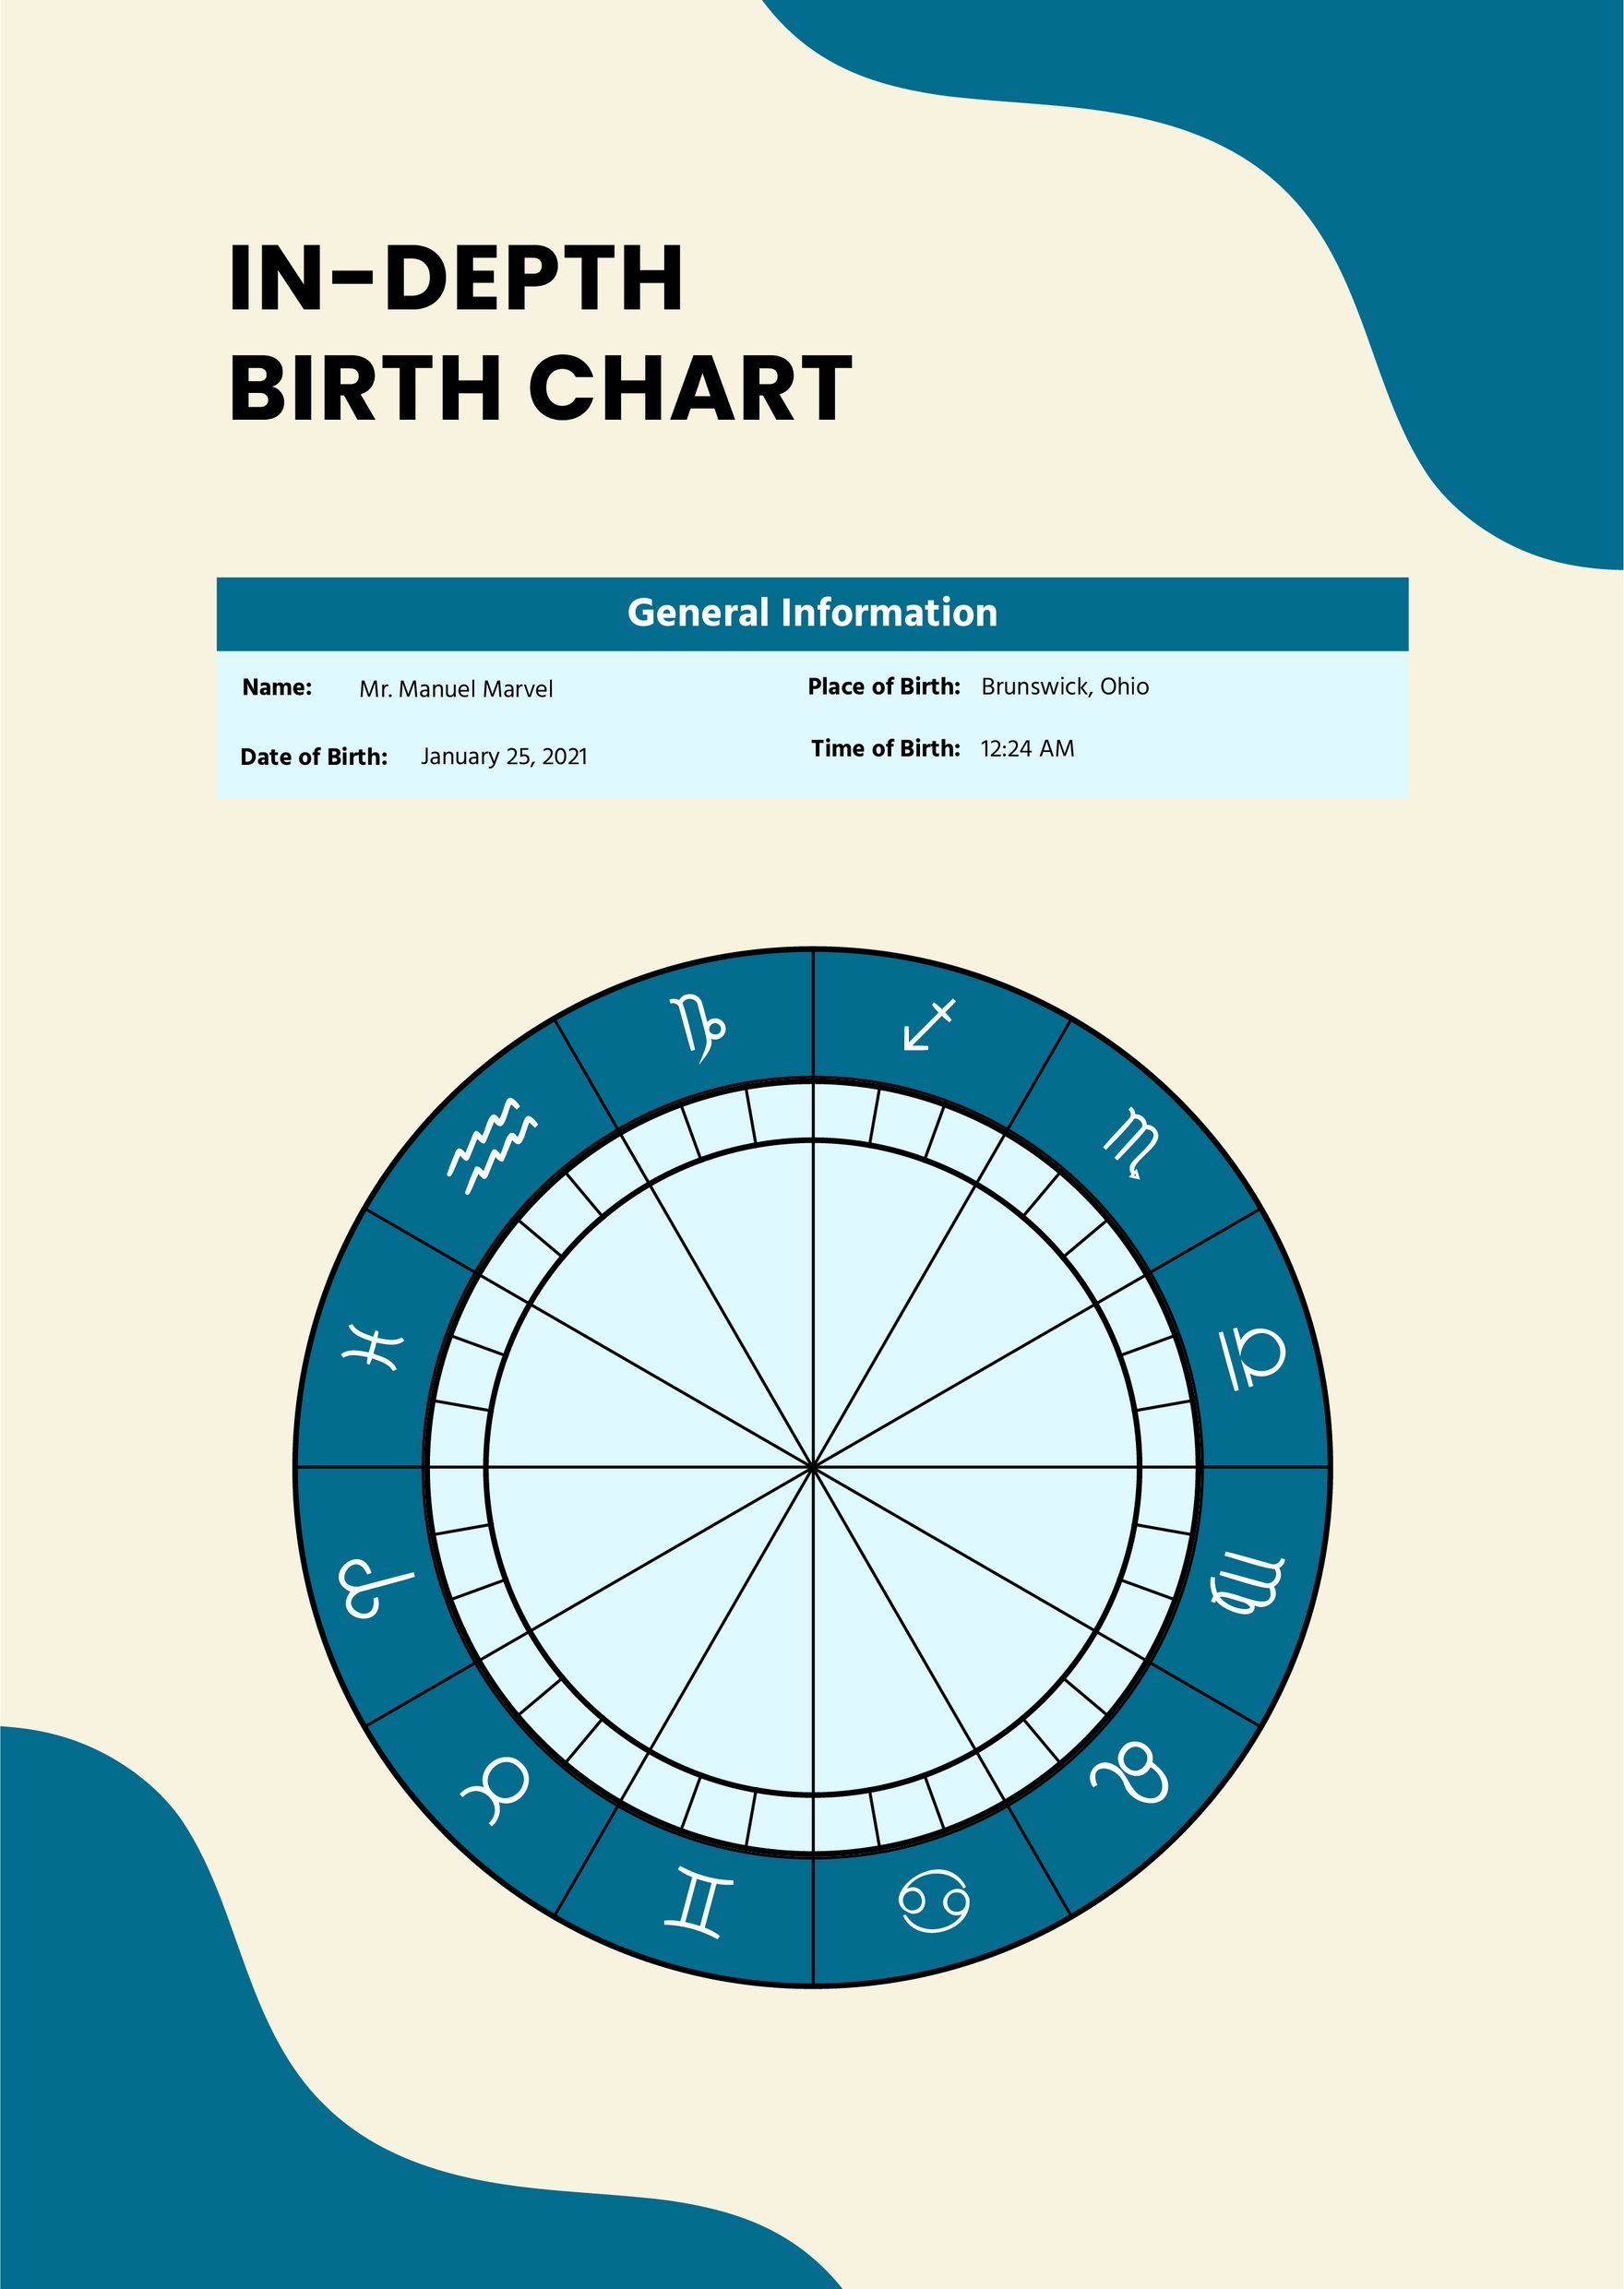 Free In-depth Birth Chart Template in PDF, Illustrator